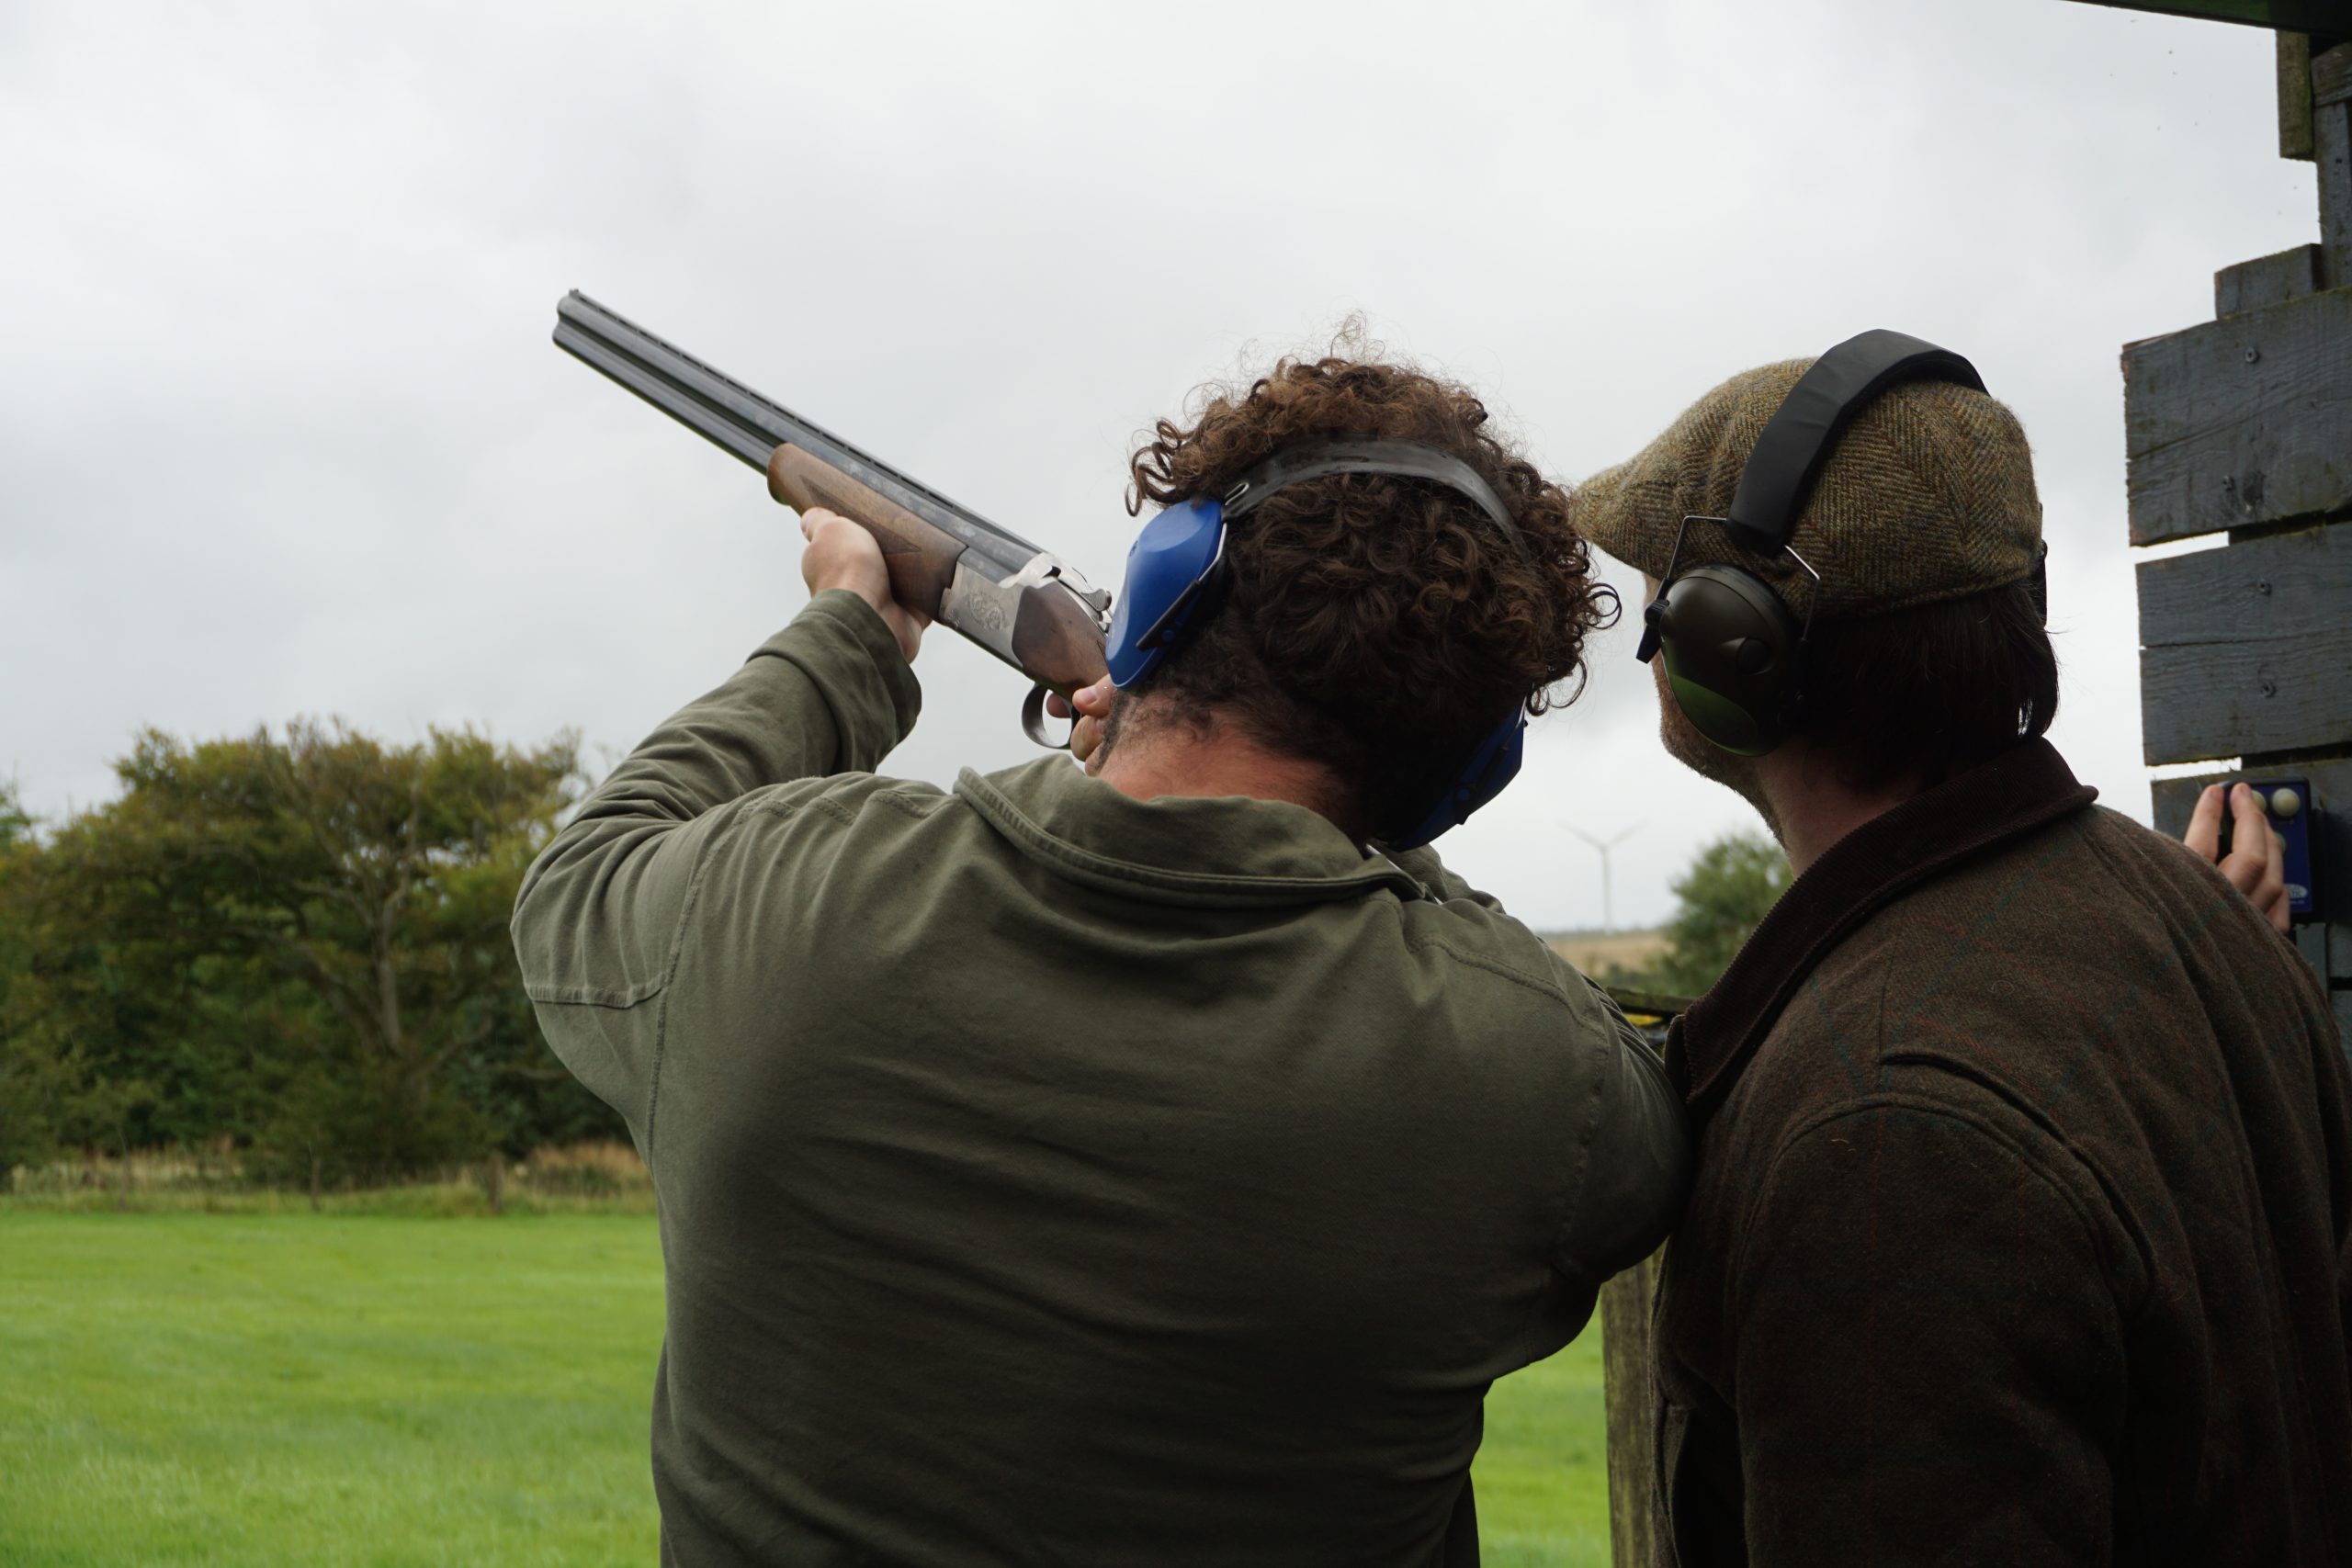 Cowans Law, Clay Bird Shooting, Glasgow, Scotland